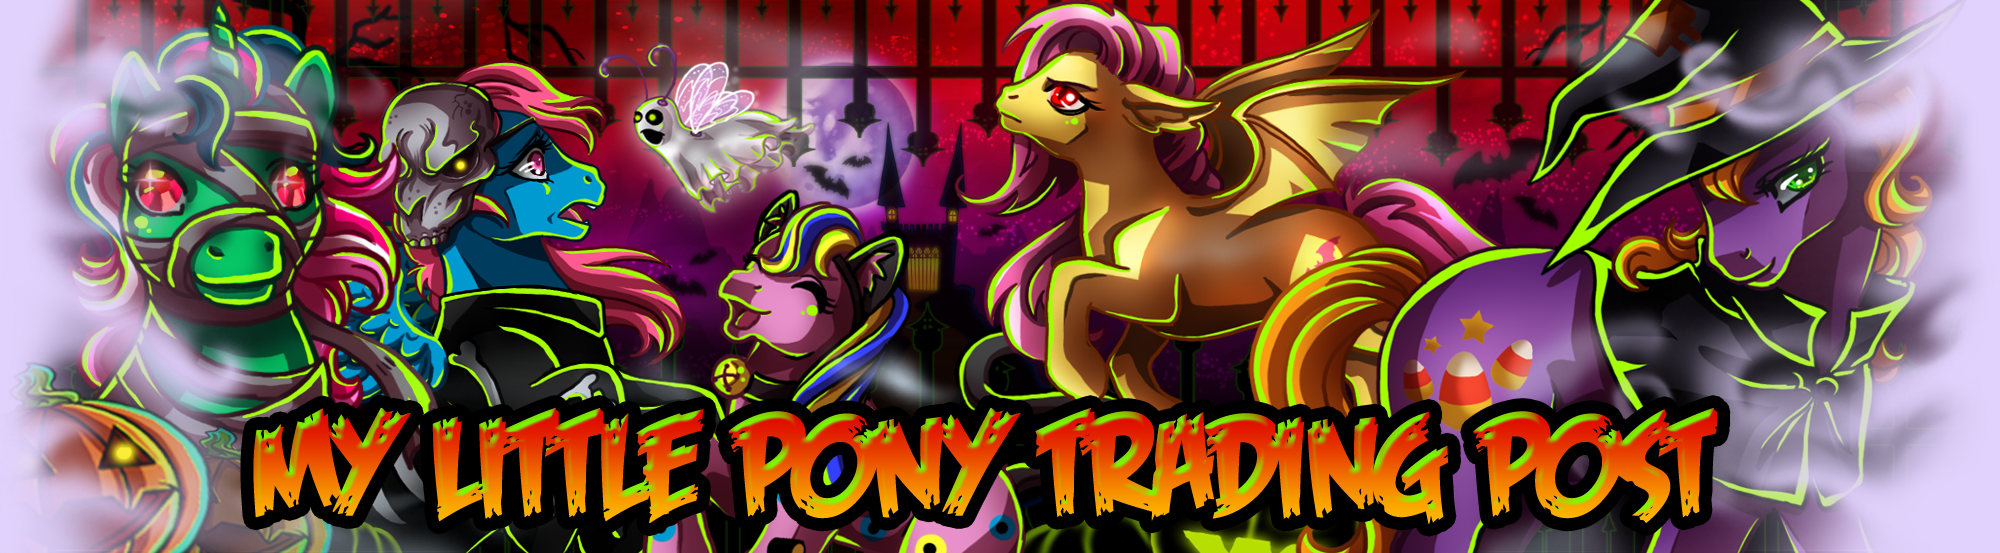 My Little Pony Trading Post